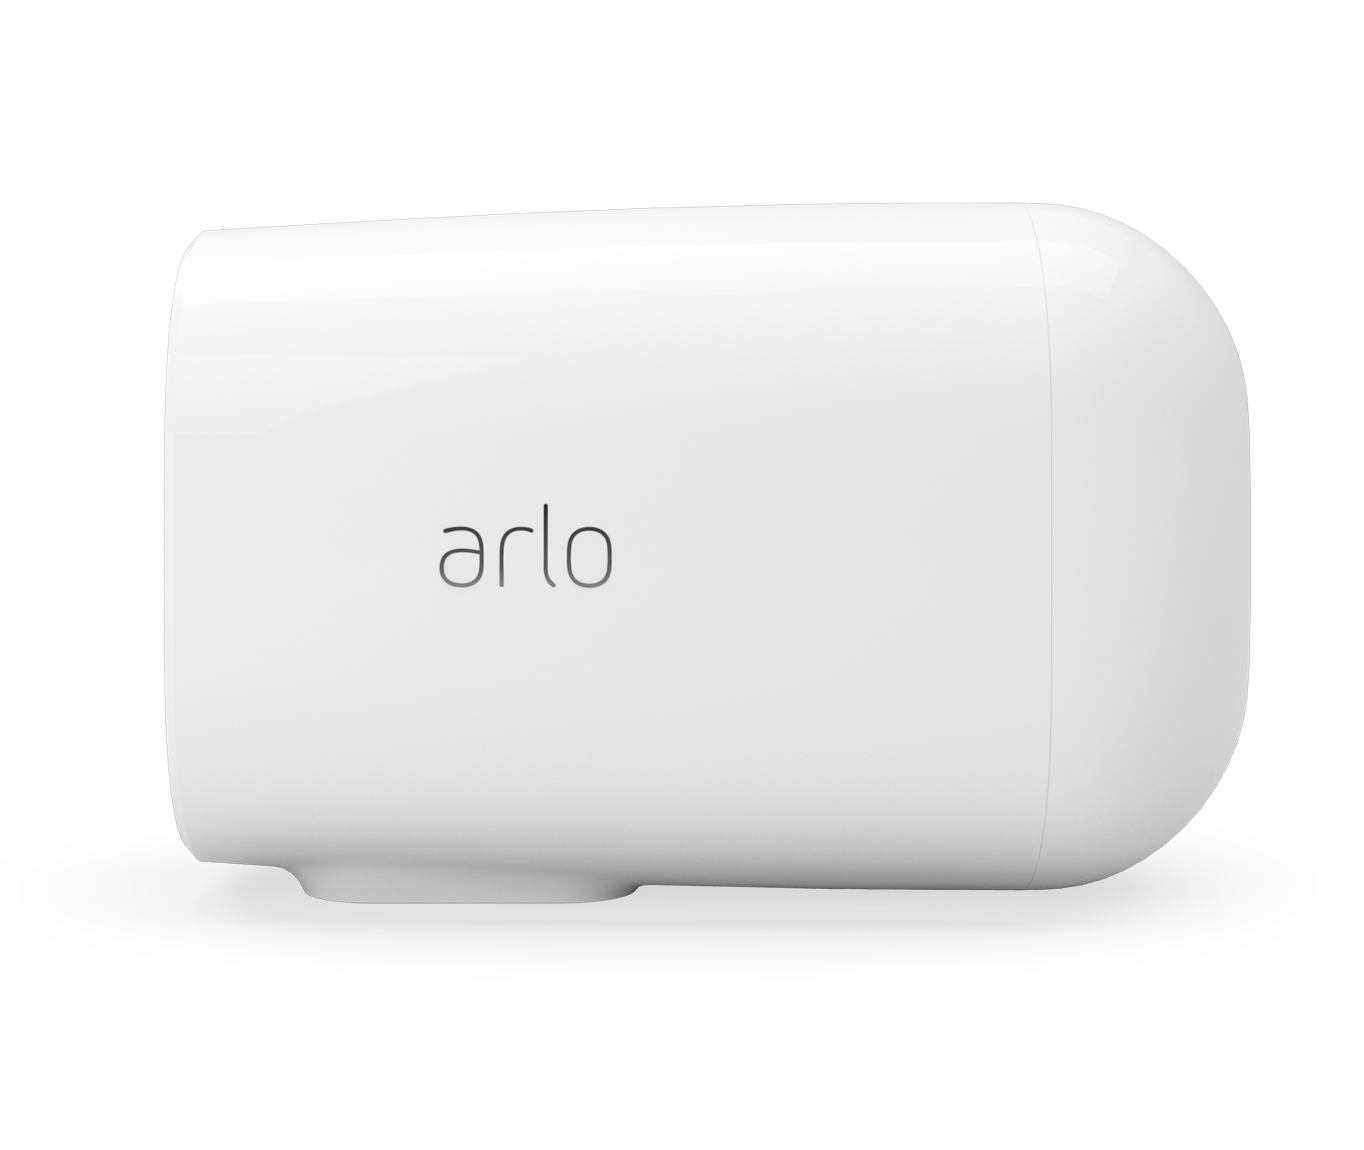 Arlo Essential XL, Long Battery Life Wireless Camera